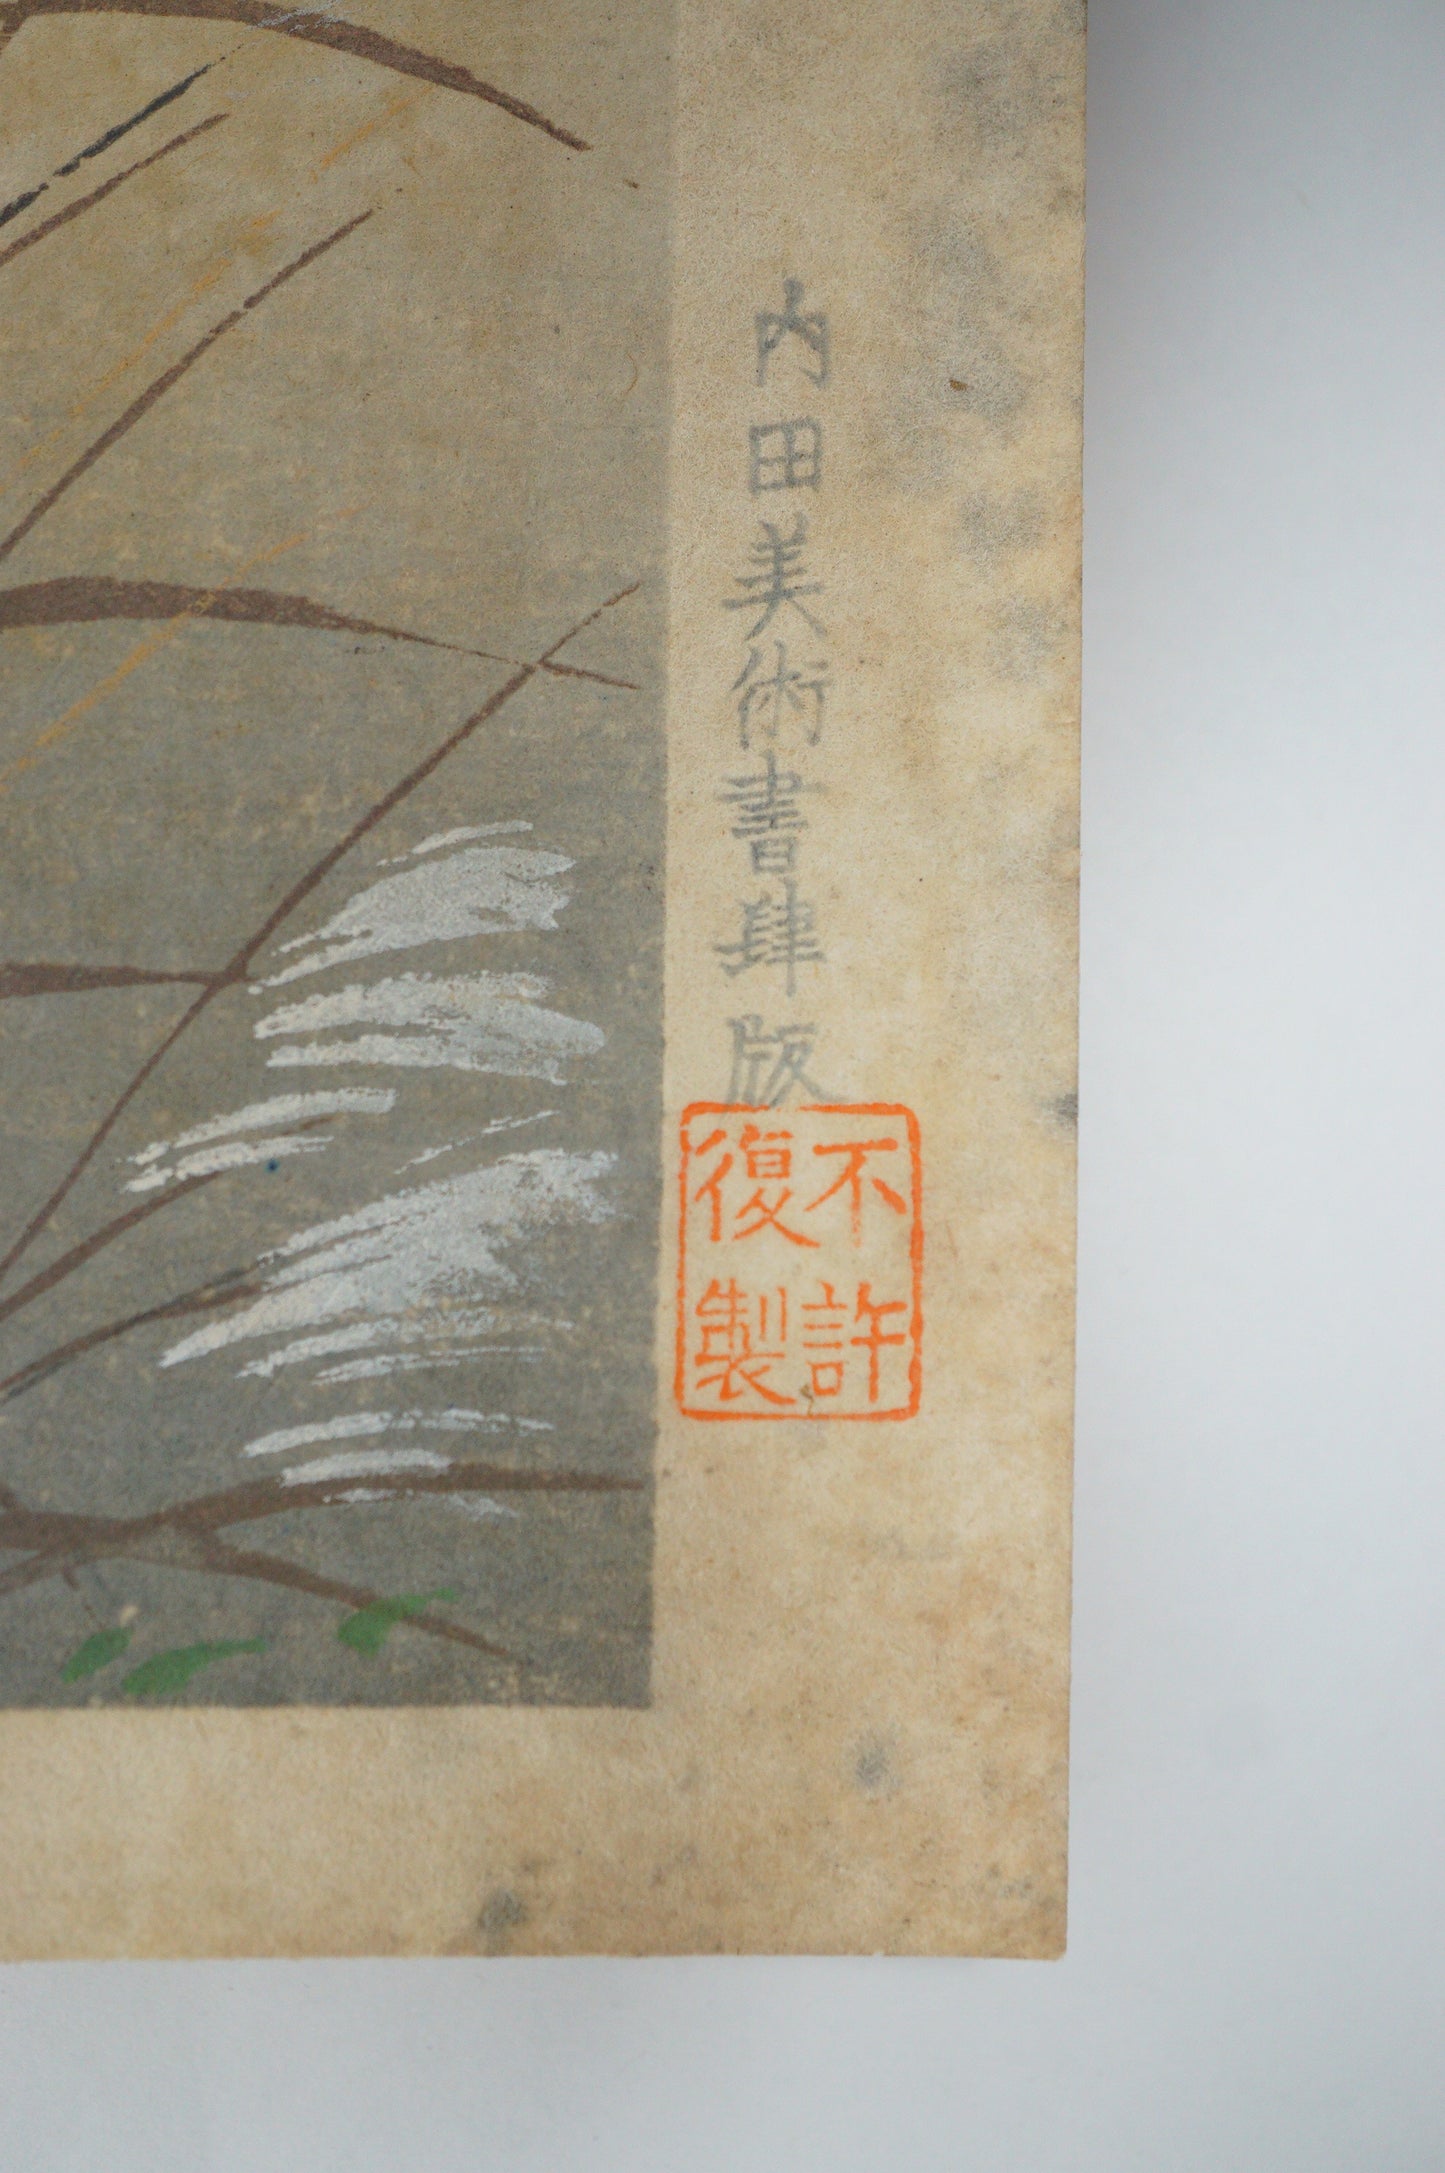 Japanese Woodblock Print Original by Tokuriki Tomikichiro 1941 Shinhanga from Japan 1130D12